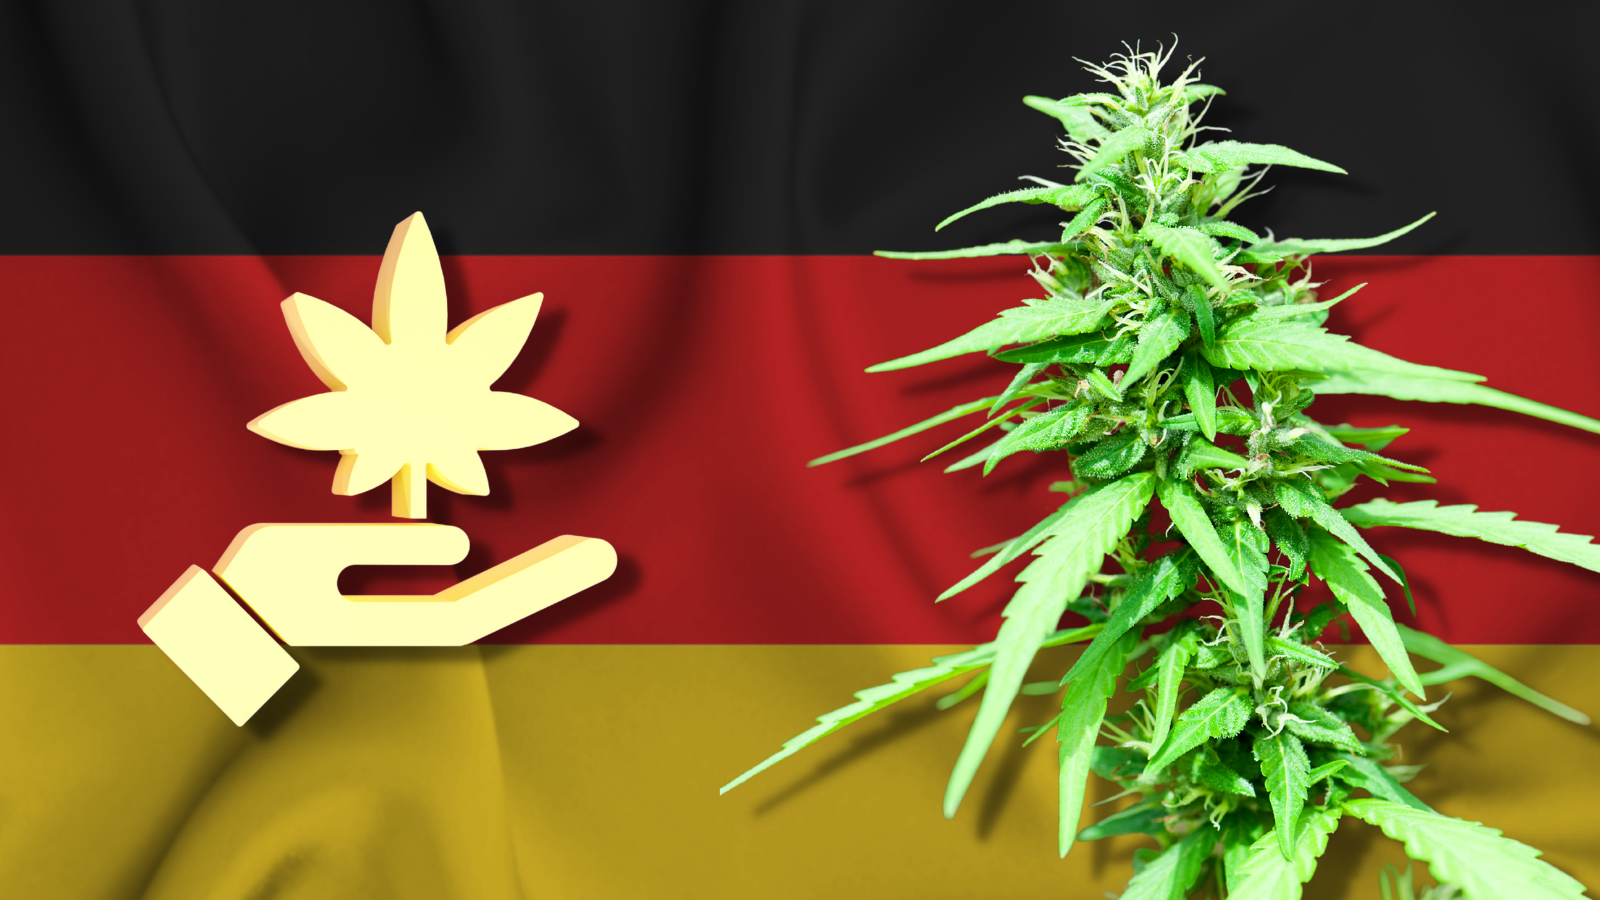 Revolutionizing! Germany’s New Marijuana Plan